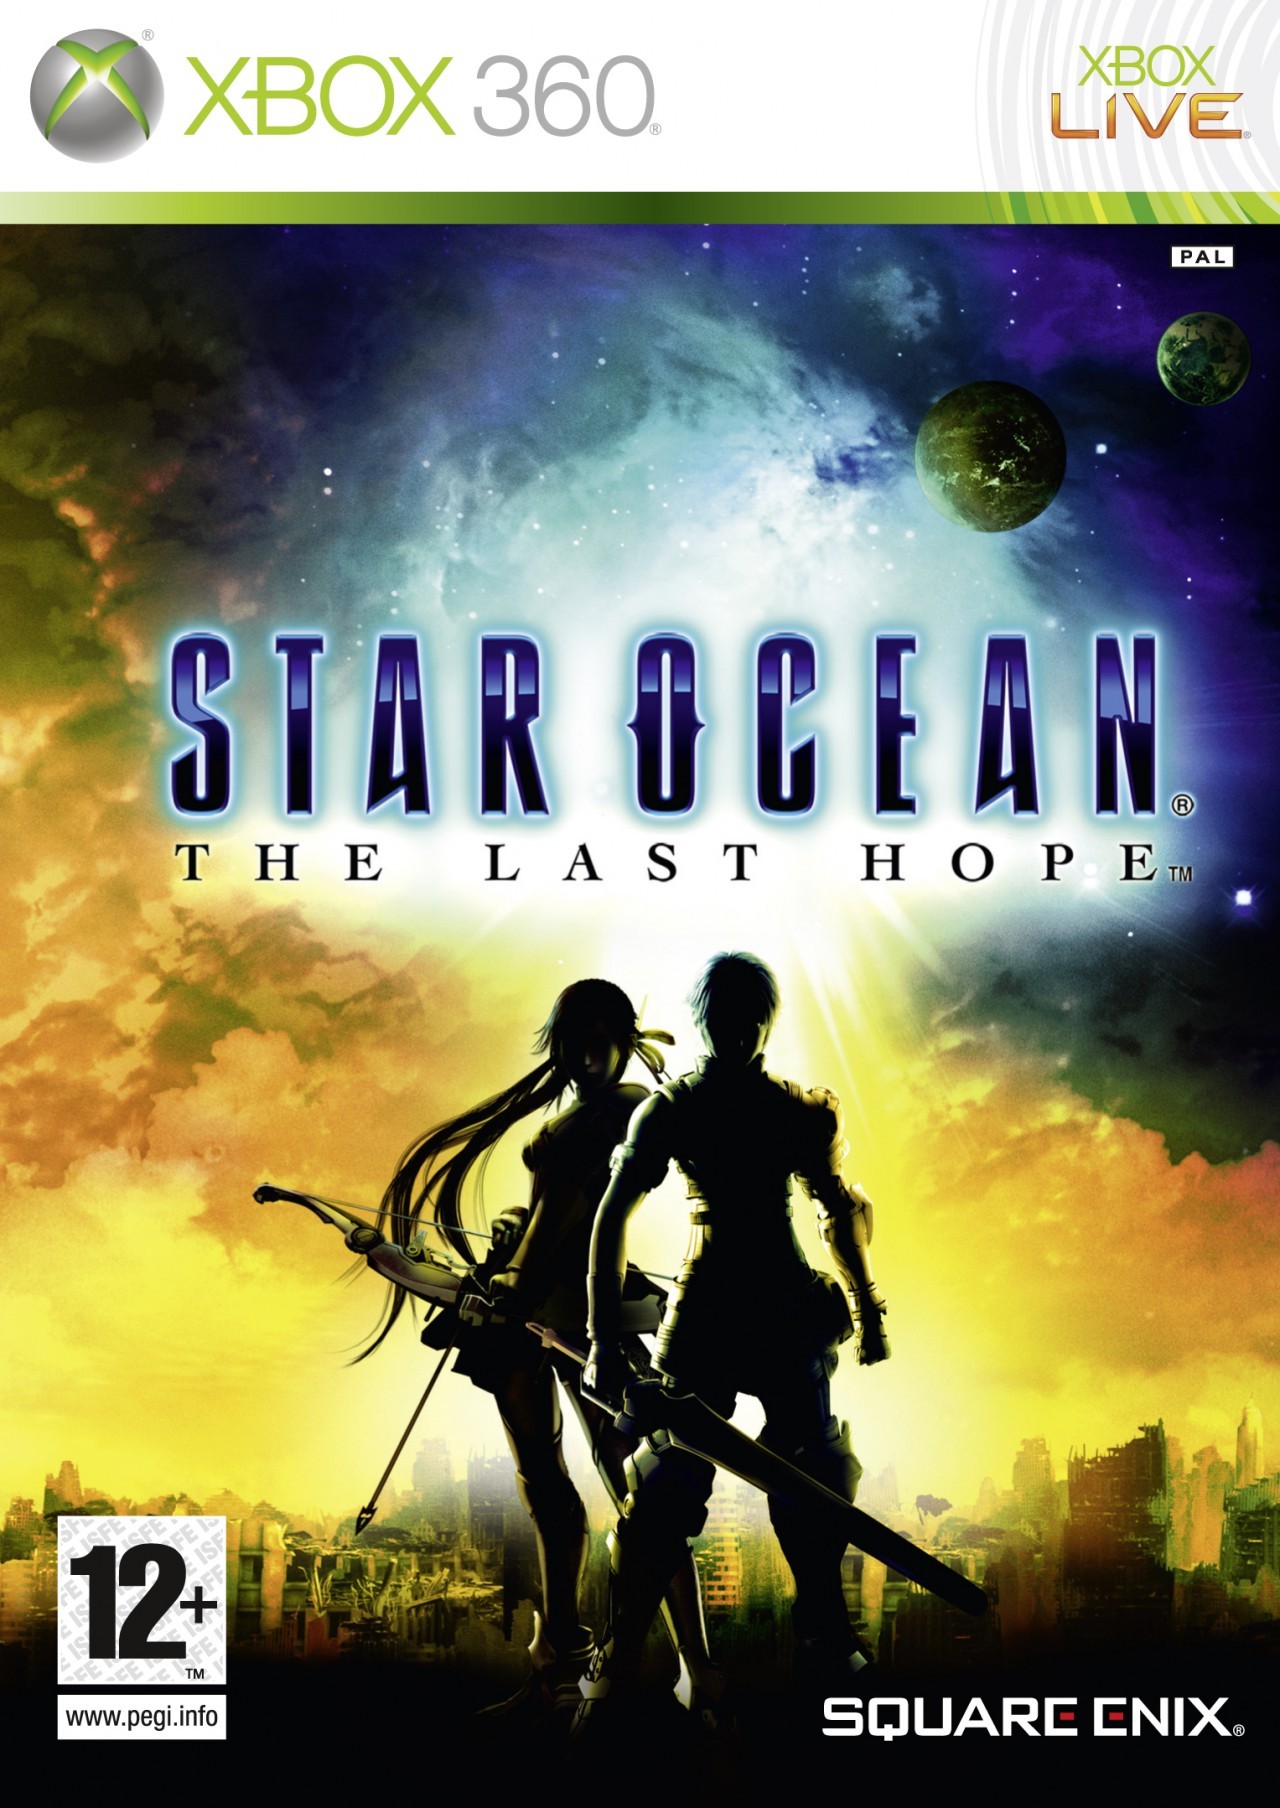 Star Ocean: The Last Hope Star Ocean Wiki FANDOM